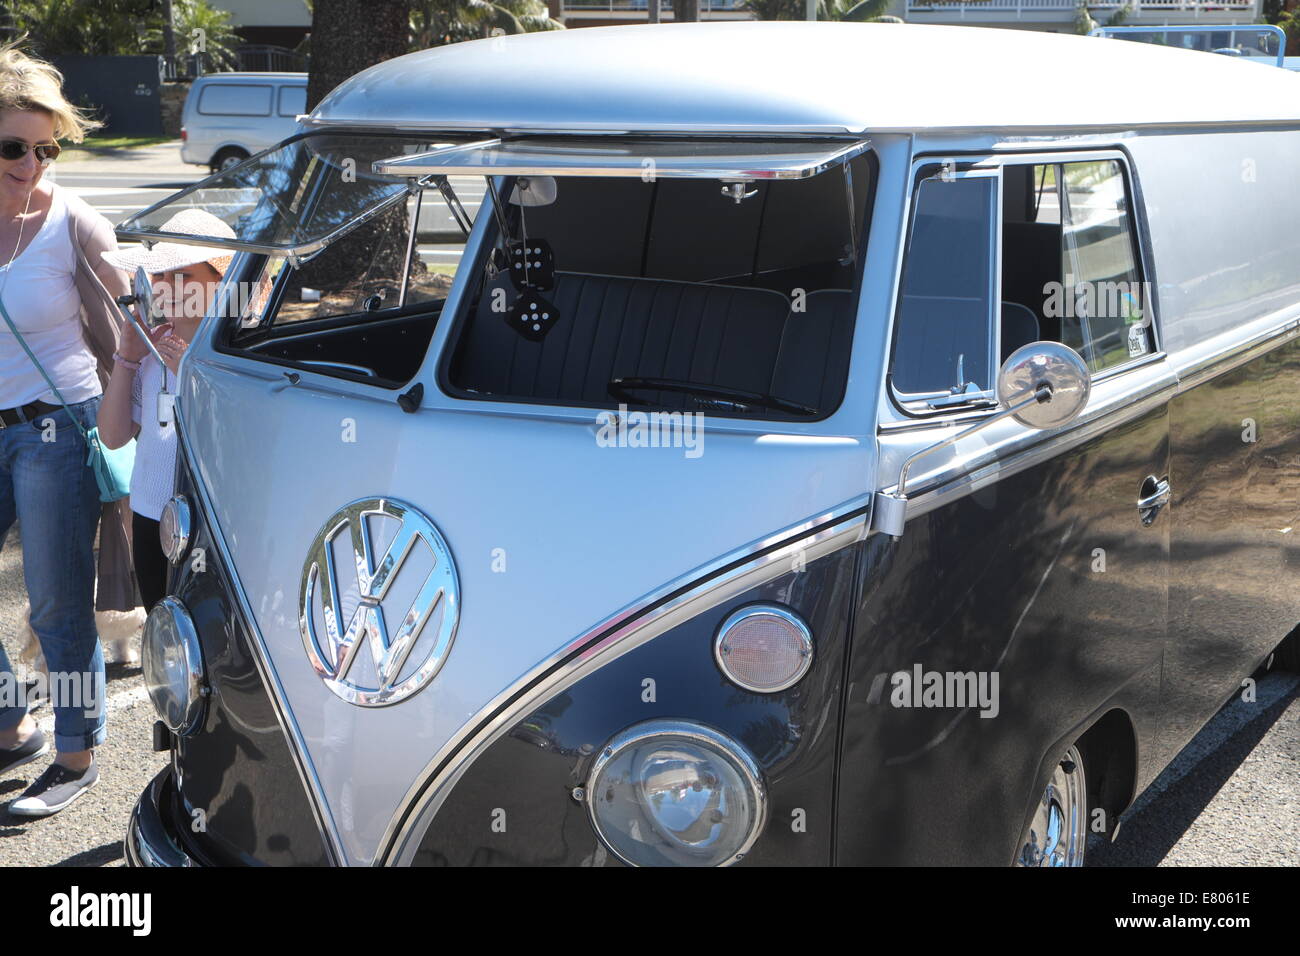 Newport Beach, Sydney, Australia. 27th Sep, 2014. Classic cars on display at Sydney's Newport Beach. Here a 1960's split screen kombi van. Credit:  martin berry/Alamy Live News Stock Photo